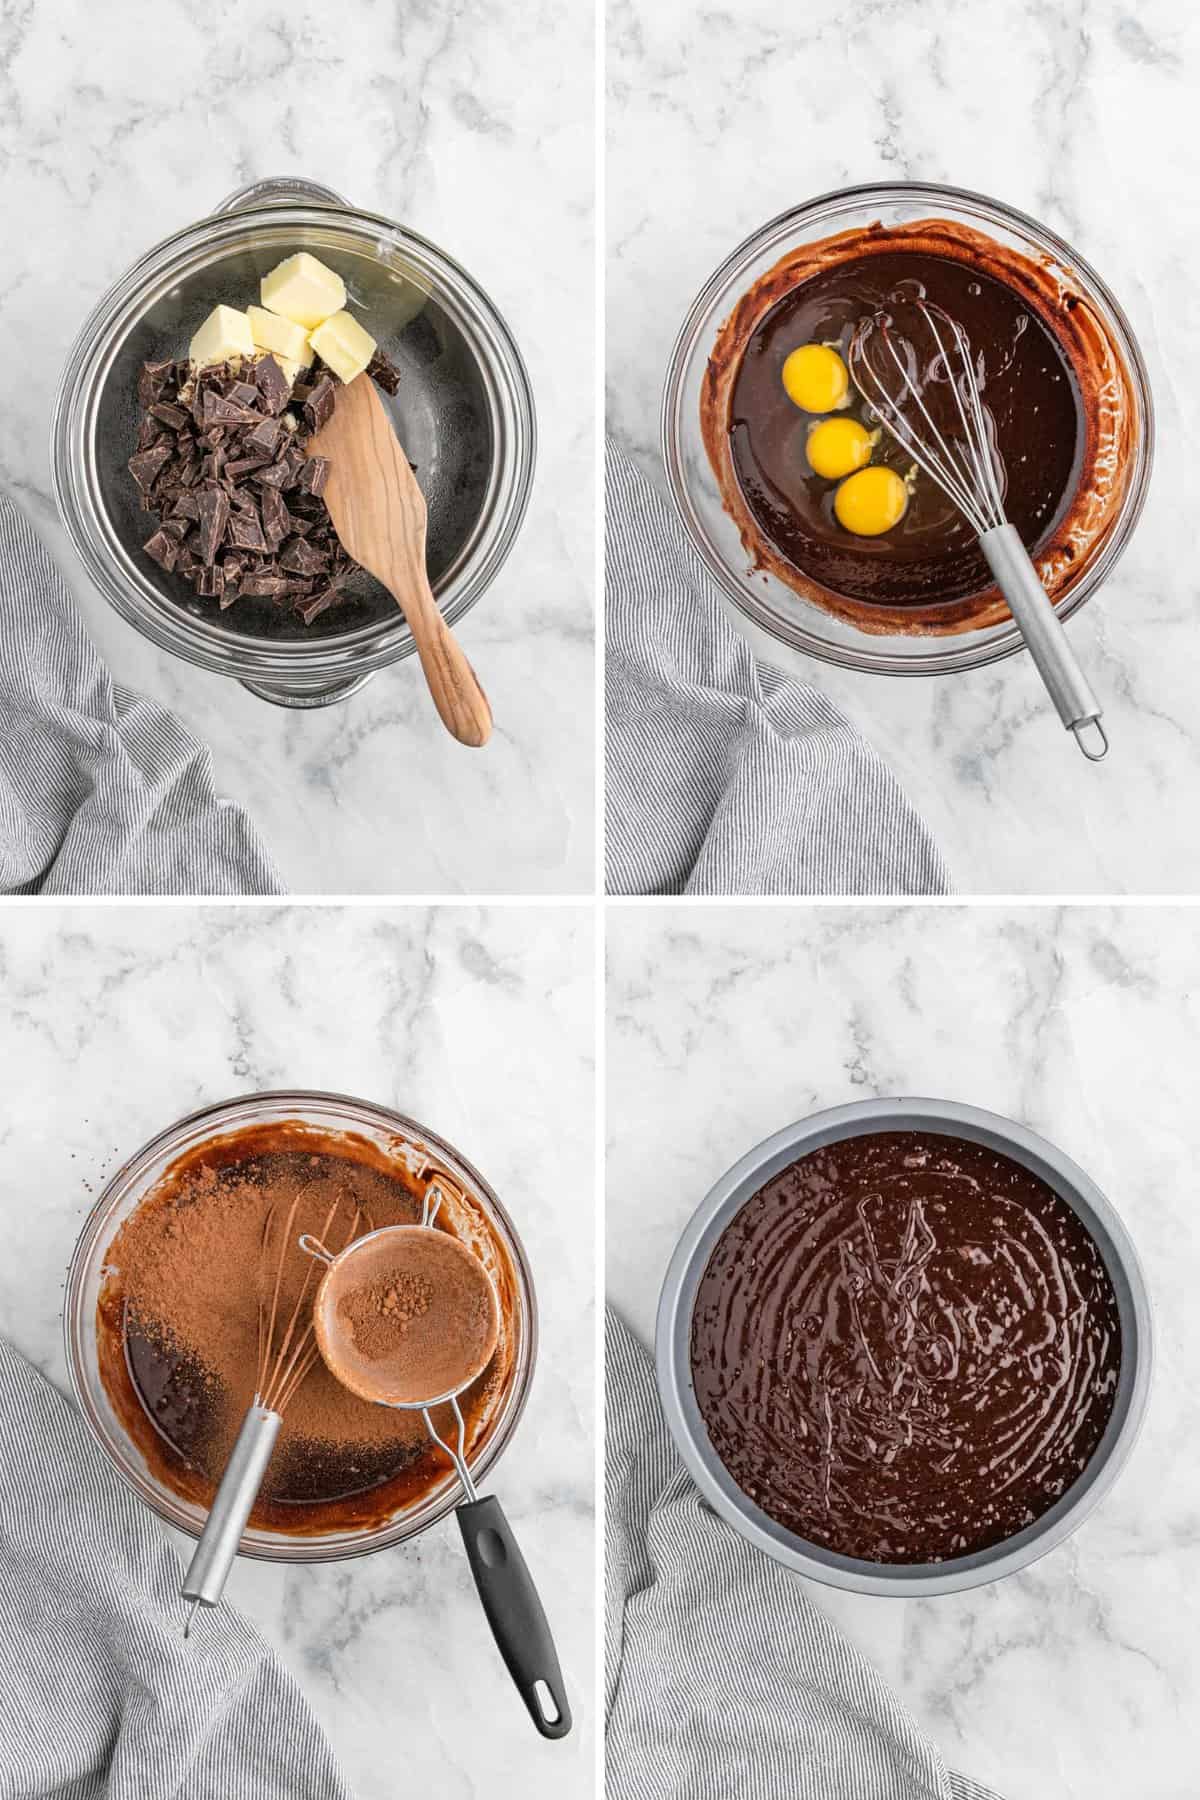 flourless chocolate cake step 1-4 collage